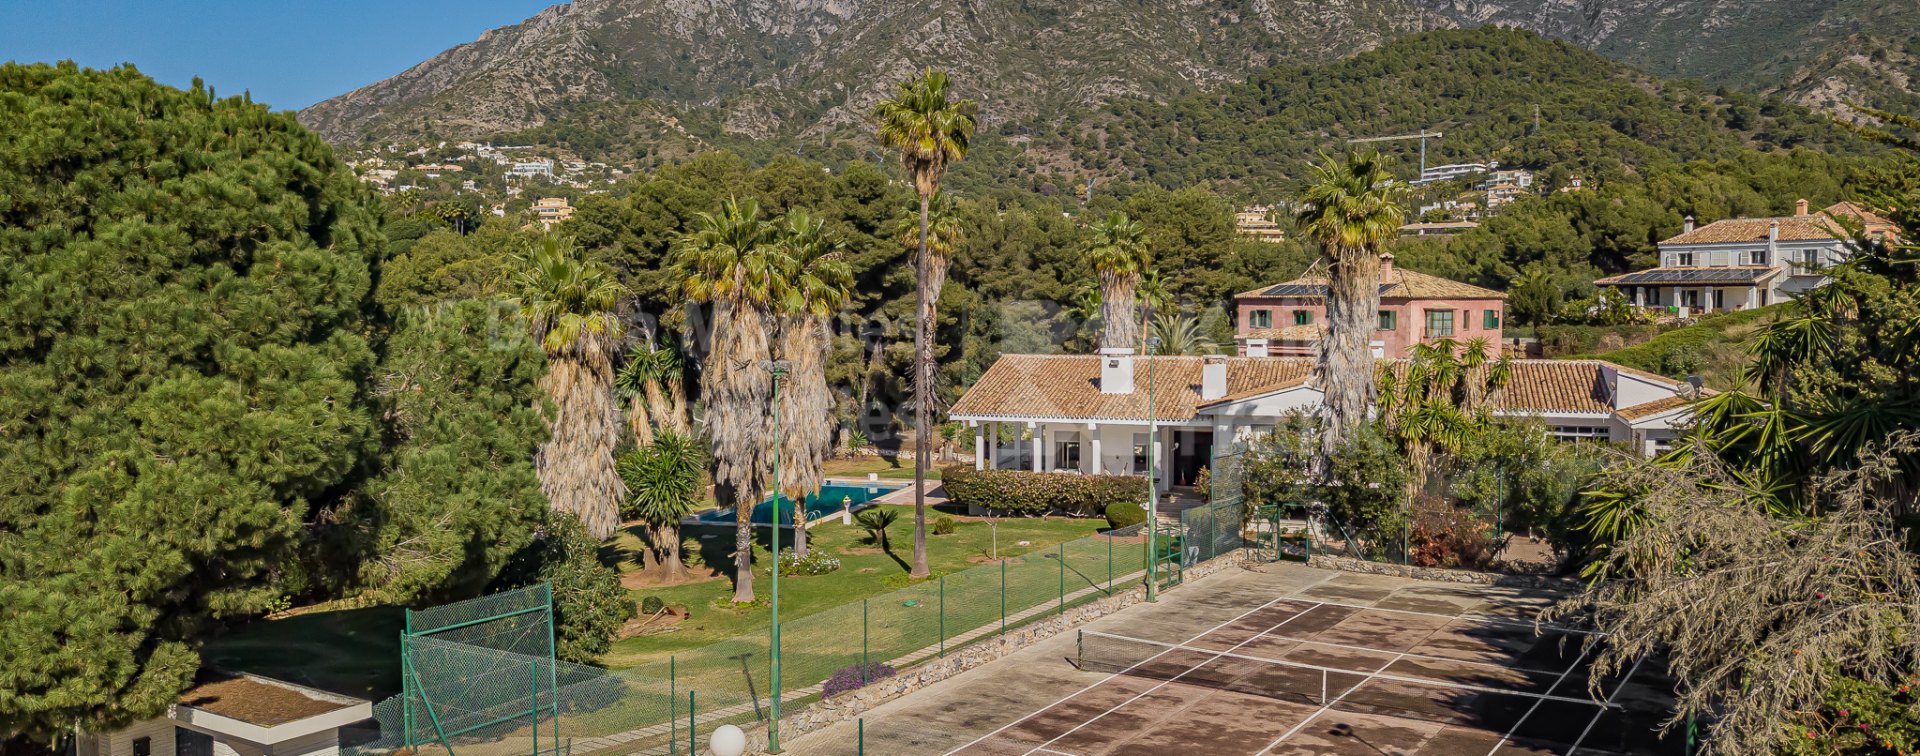 El Mirador, Villa avec vue imprenable sur un grand terrain